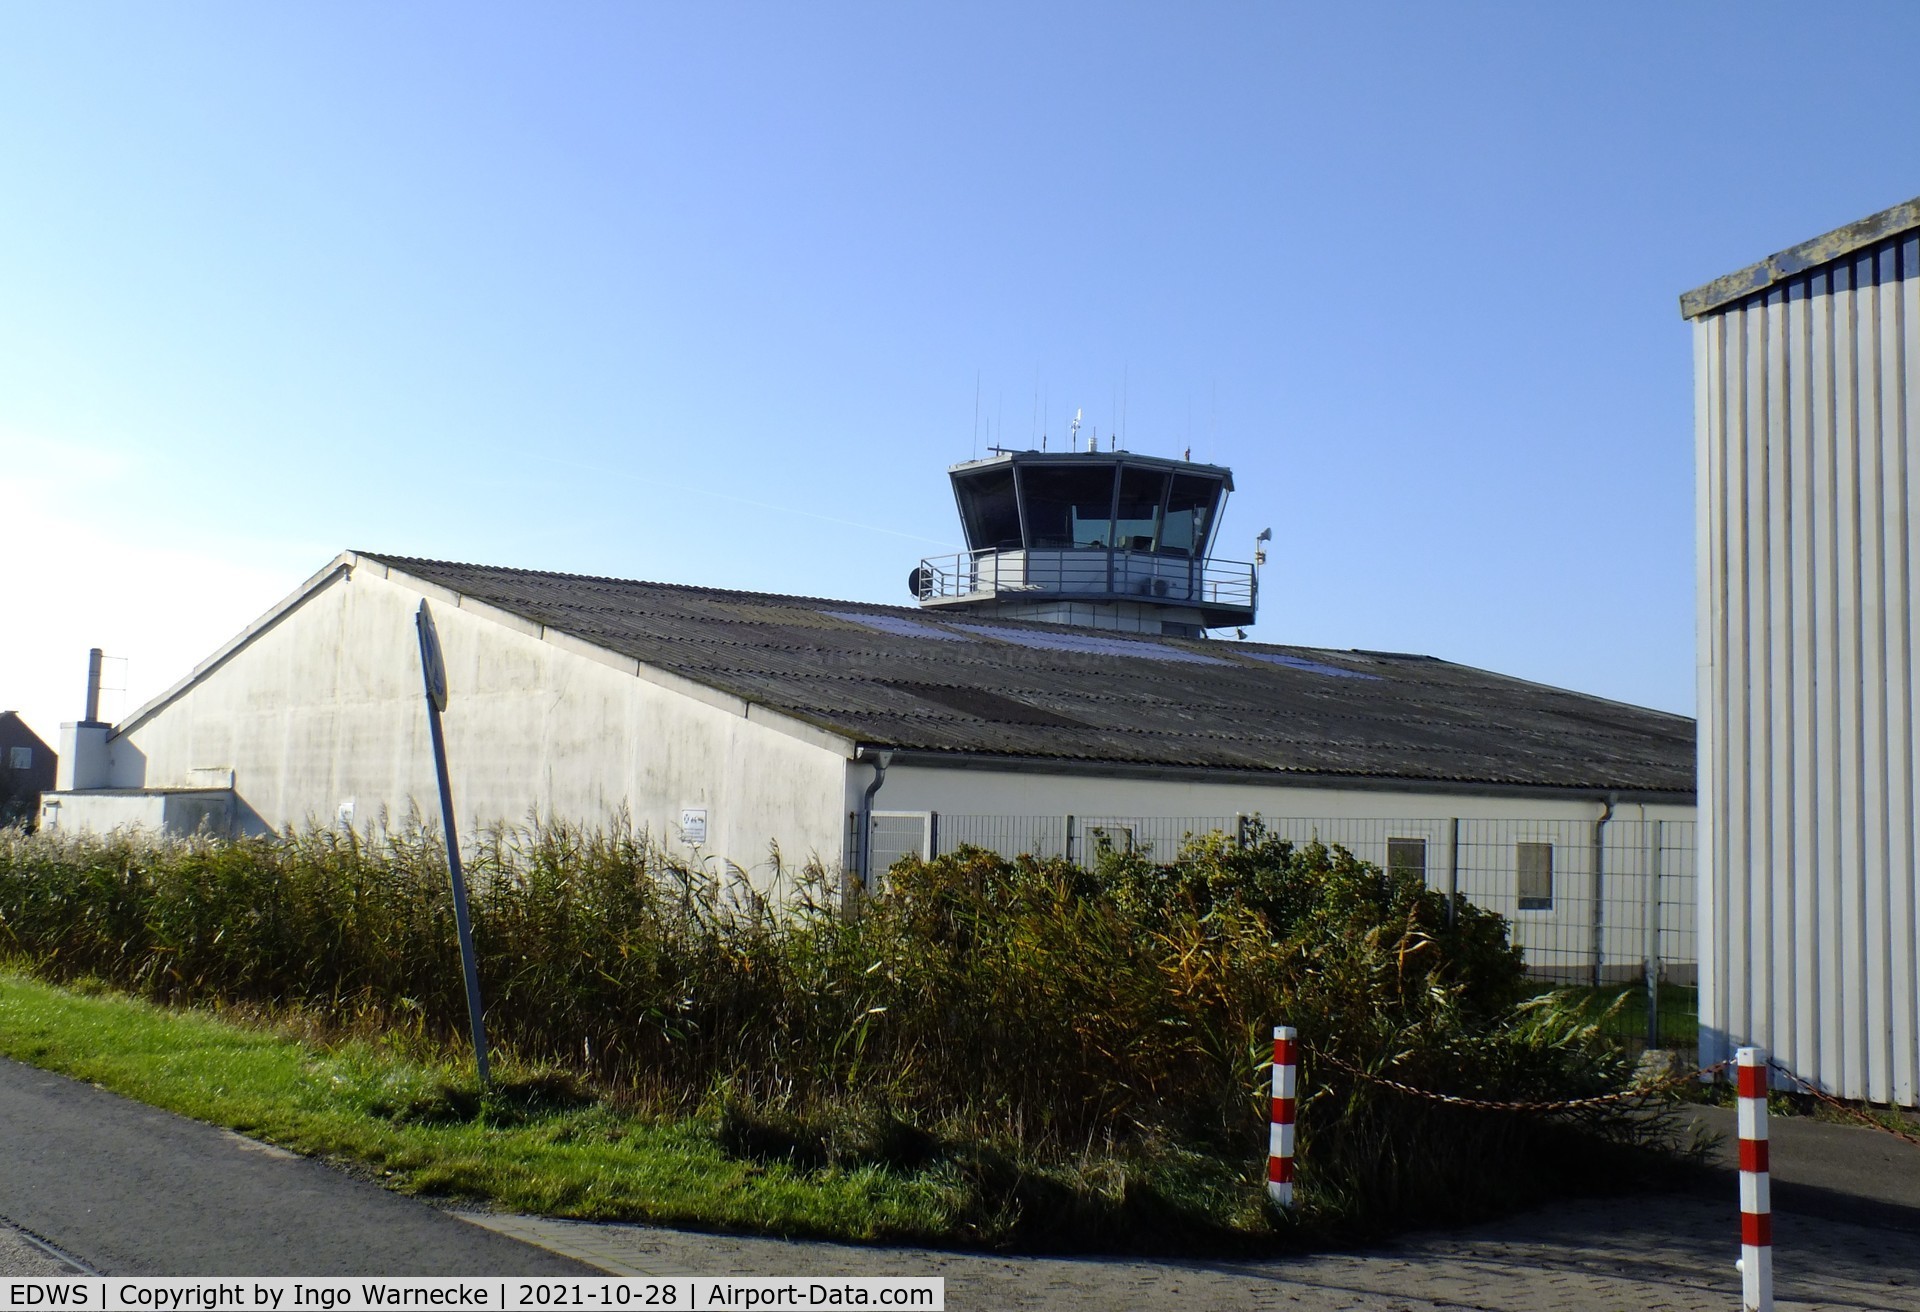 EDWS Airport - Norden-Norddeich airfield hangar and tower